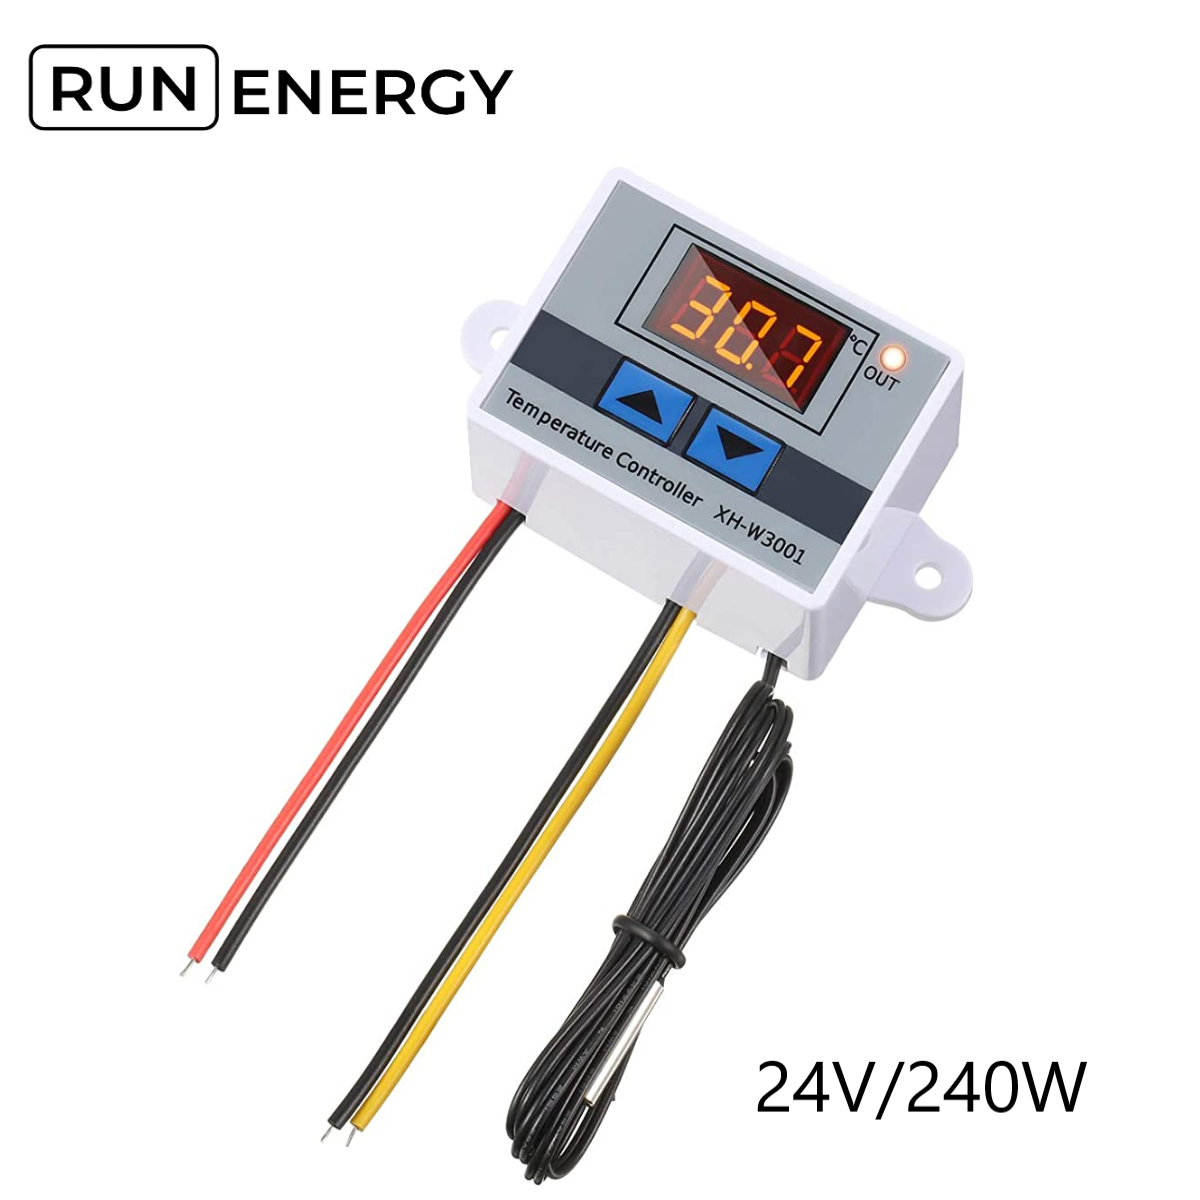 Цифровой регулятор температуры Run Energy 24V/240W XH-W3001 (X-CX01188C) - фотография № 1